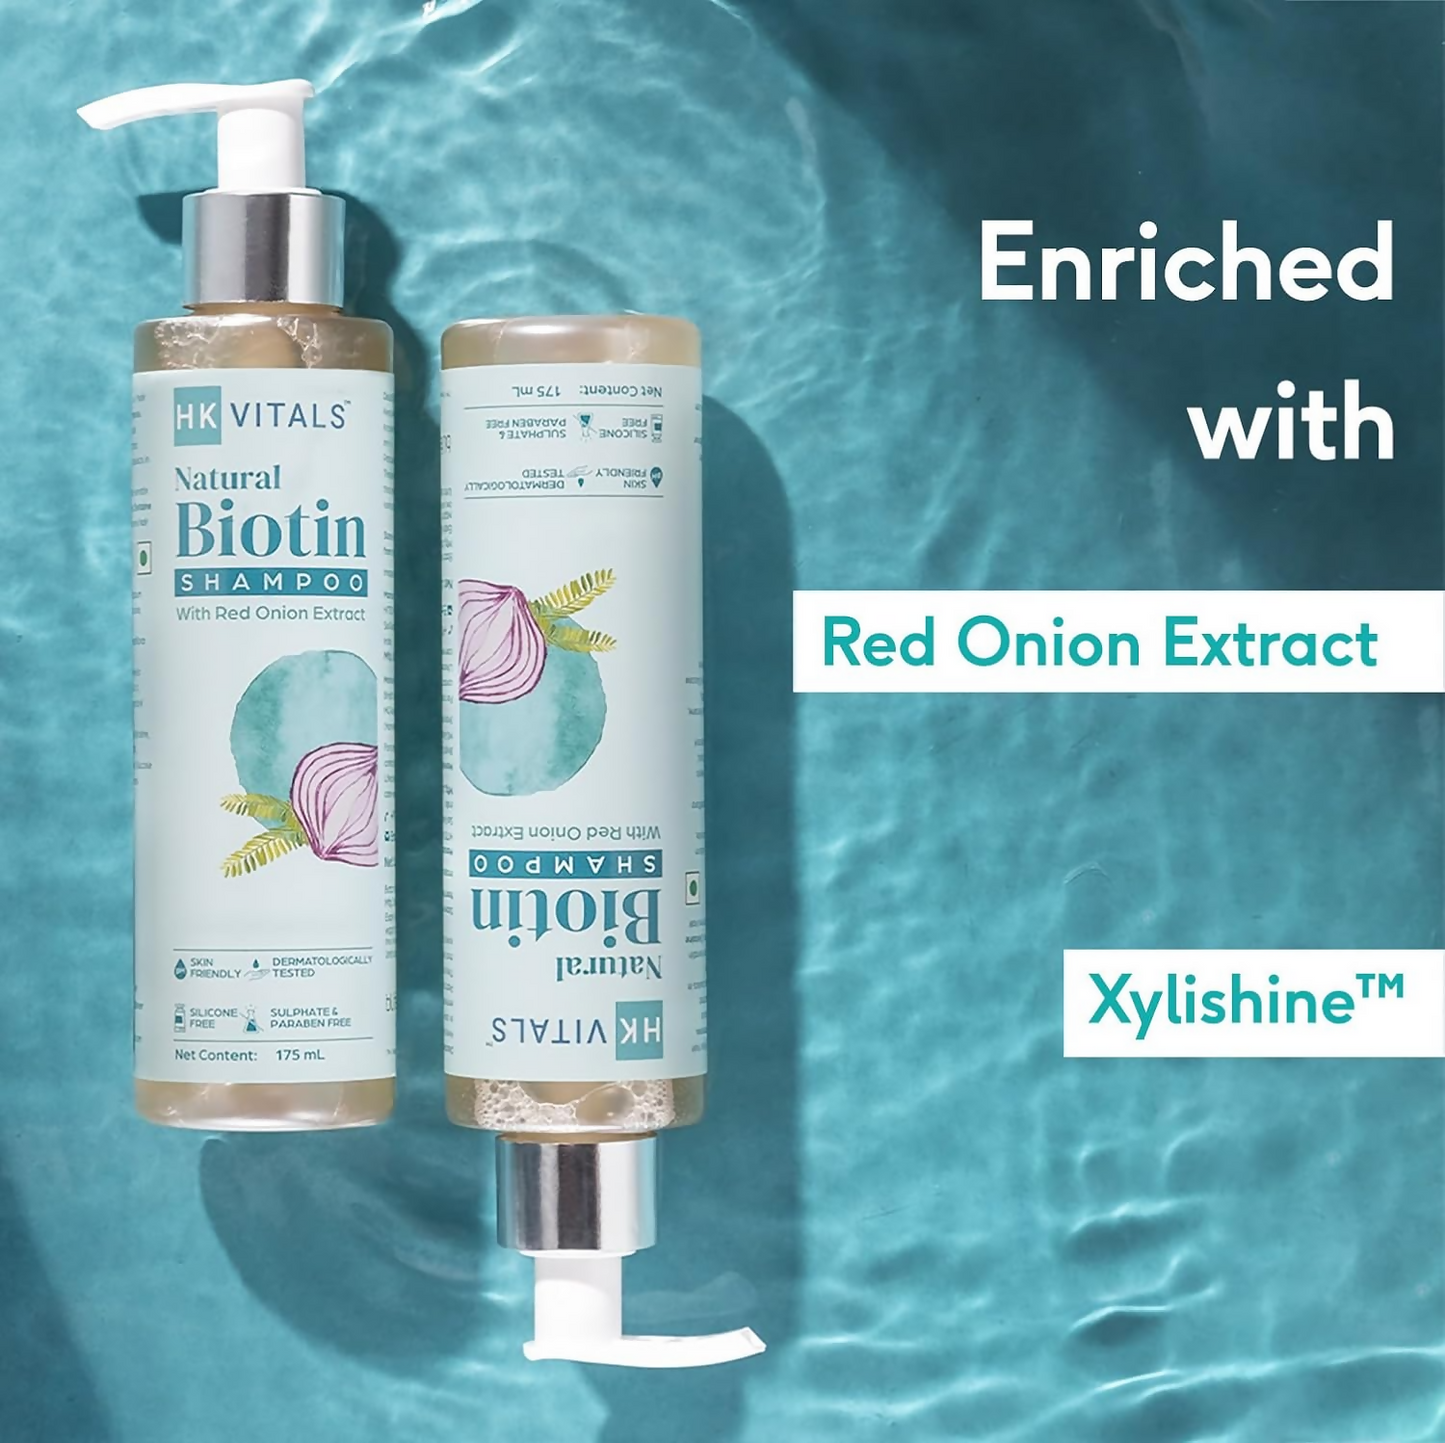 HK Vitals Natural Biotin Shampoo